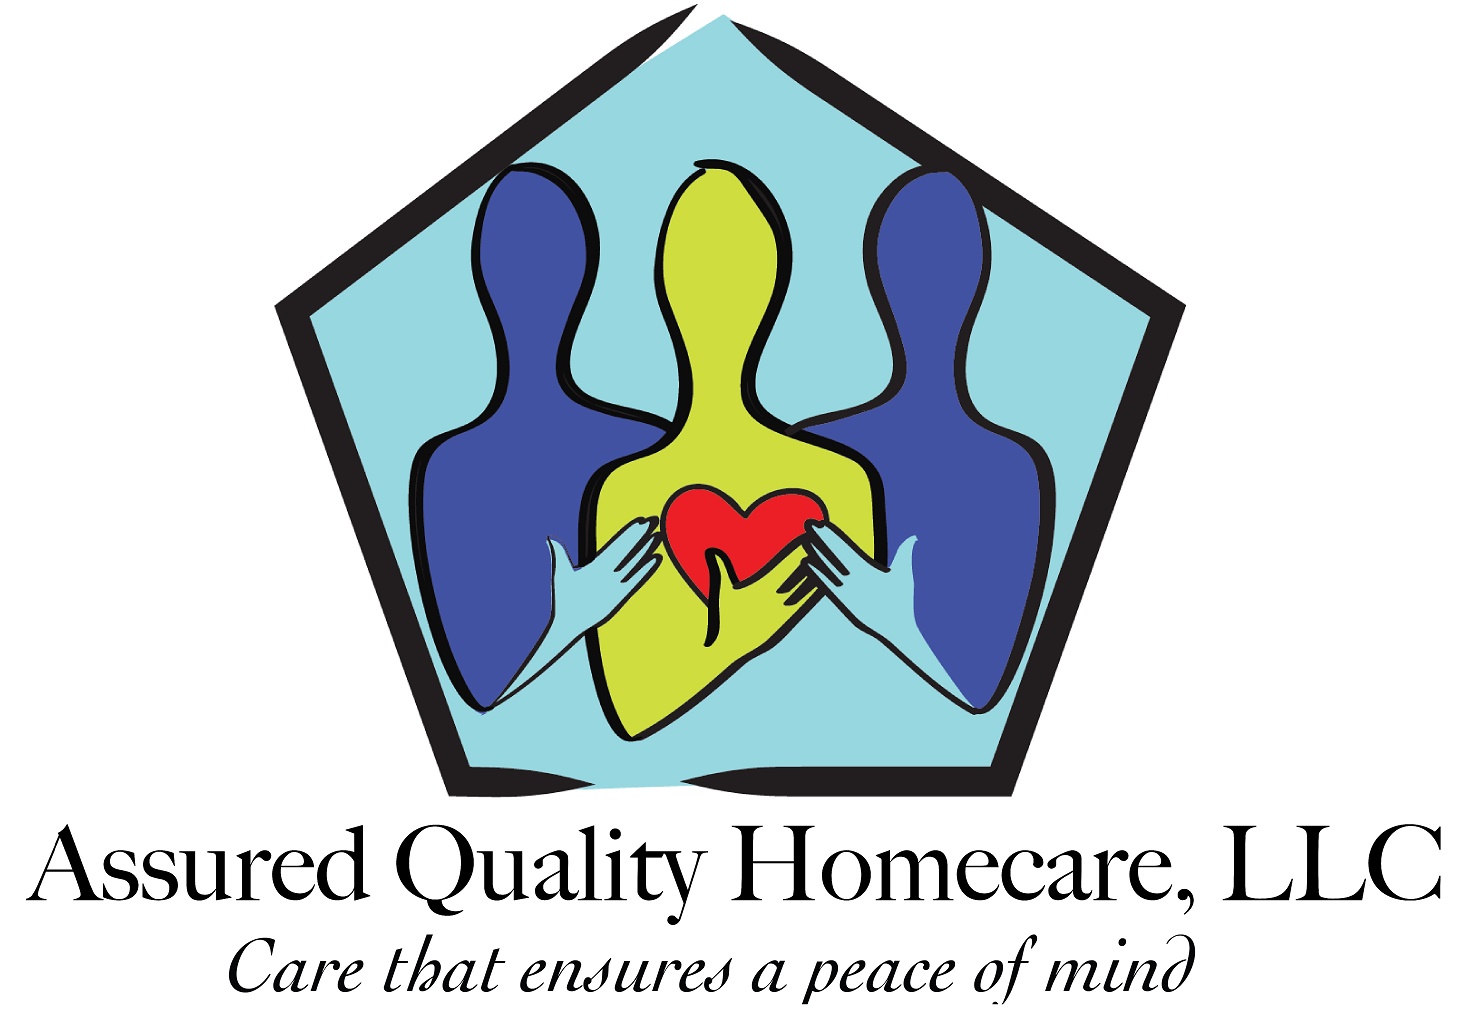 Assured Quality Homecare, LLC